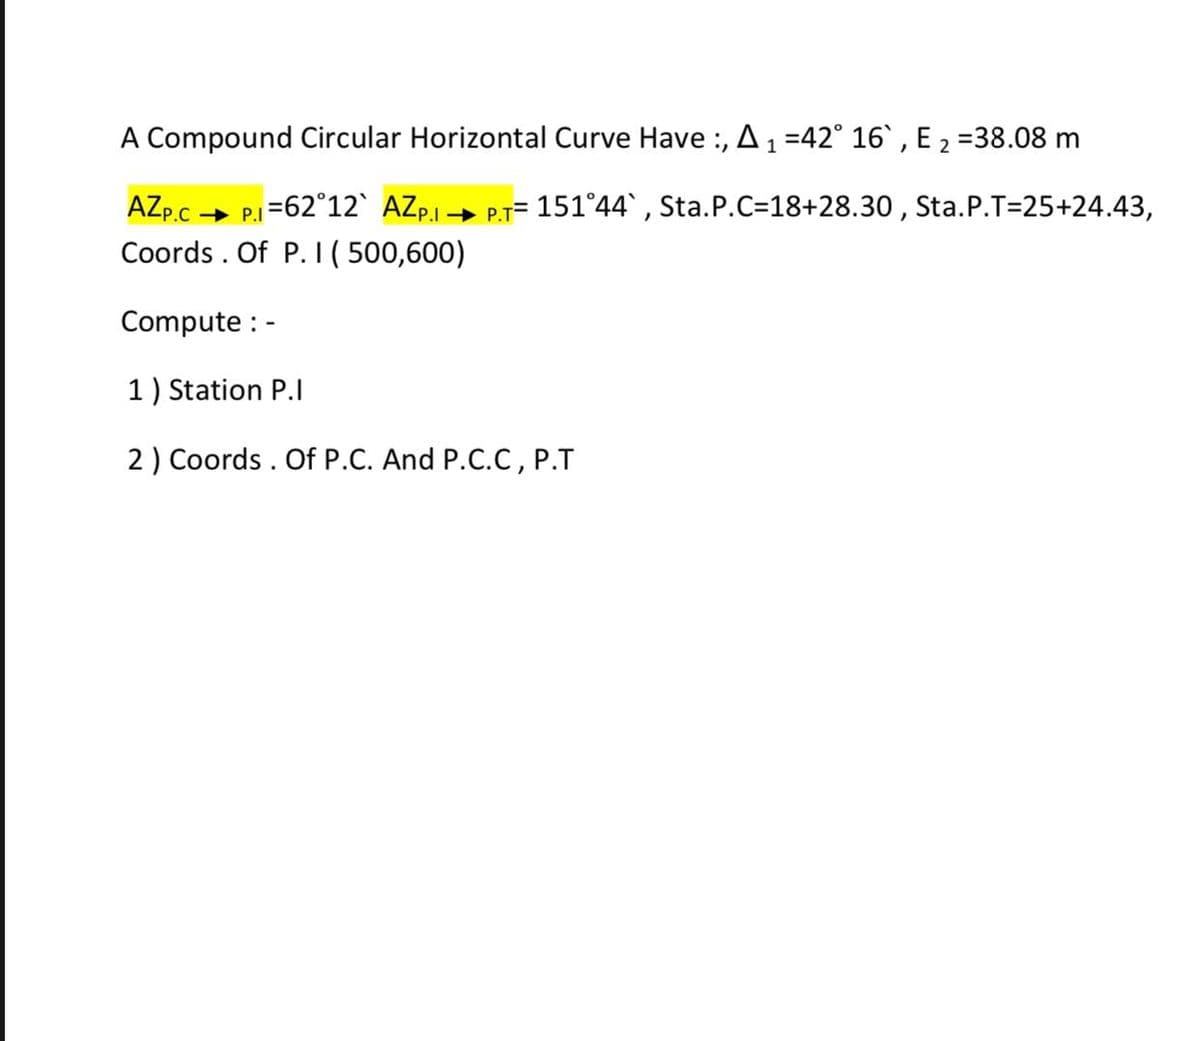 A Compound Circular Horizontal Curve Have :, A1 =42° 16` , E 2 =38.08 m
AZp.C
+ P.I =62°12` AZp.1→ P.T=
= 151°44, Sta.P.C=18+28.30 , Sta.P.T=25+24.43,
Coords . Of P. I( 500,600)
Compute : -
1) Station P.I
2 ) Coords . Of P.C. And P.C.C, P.T
